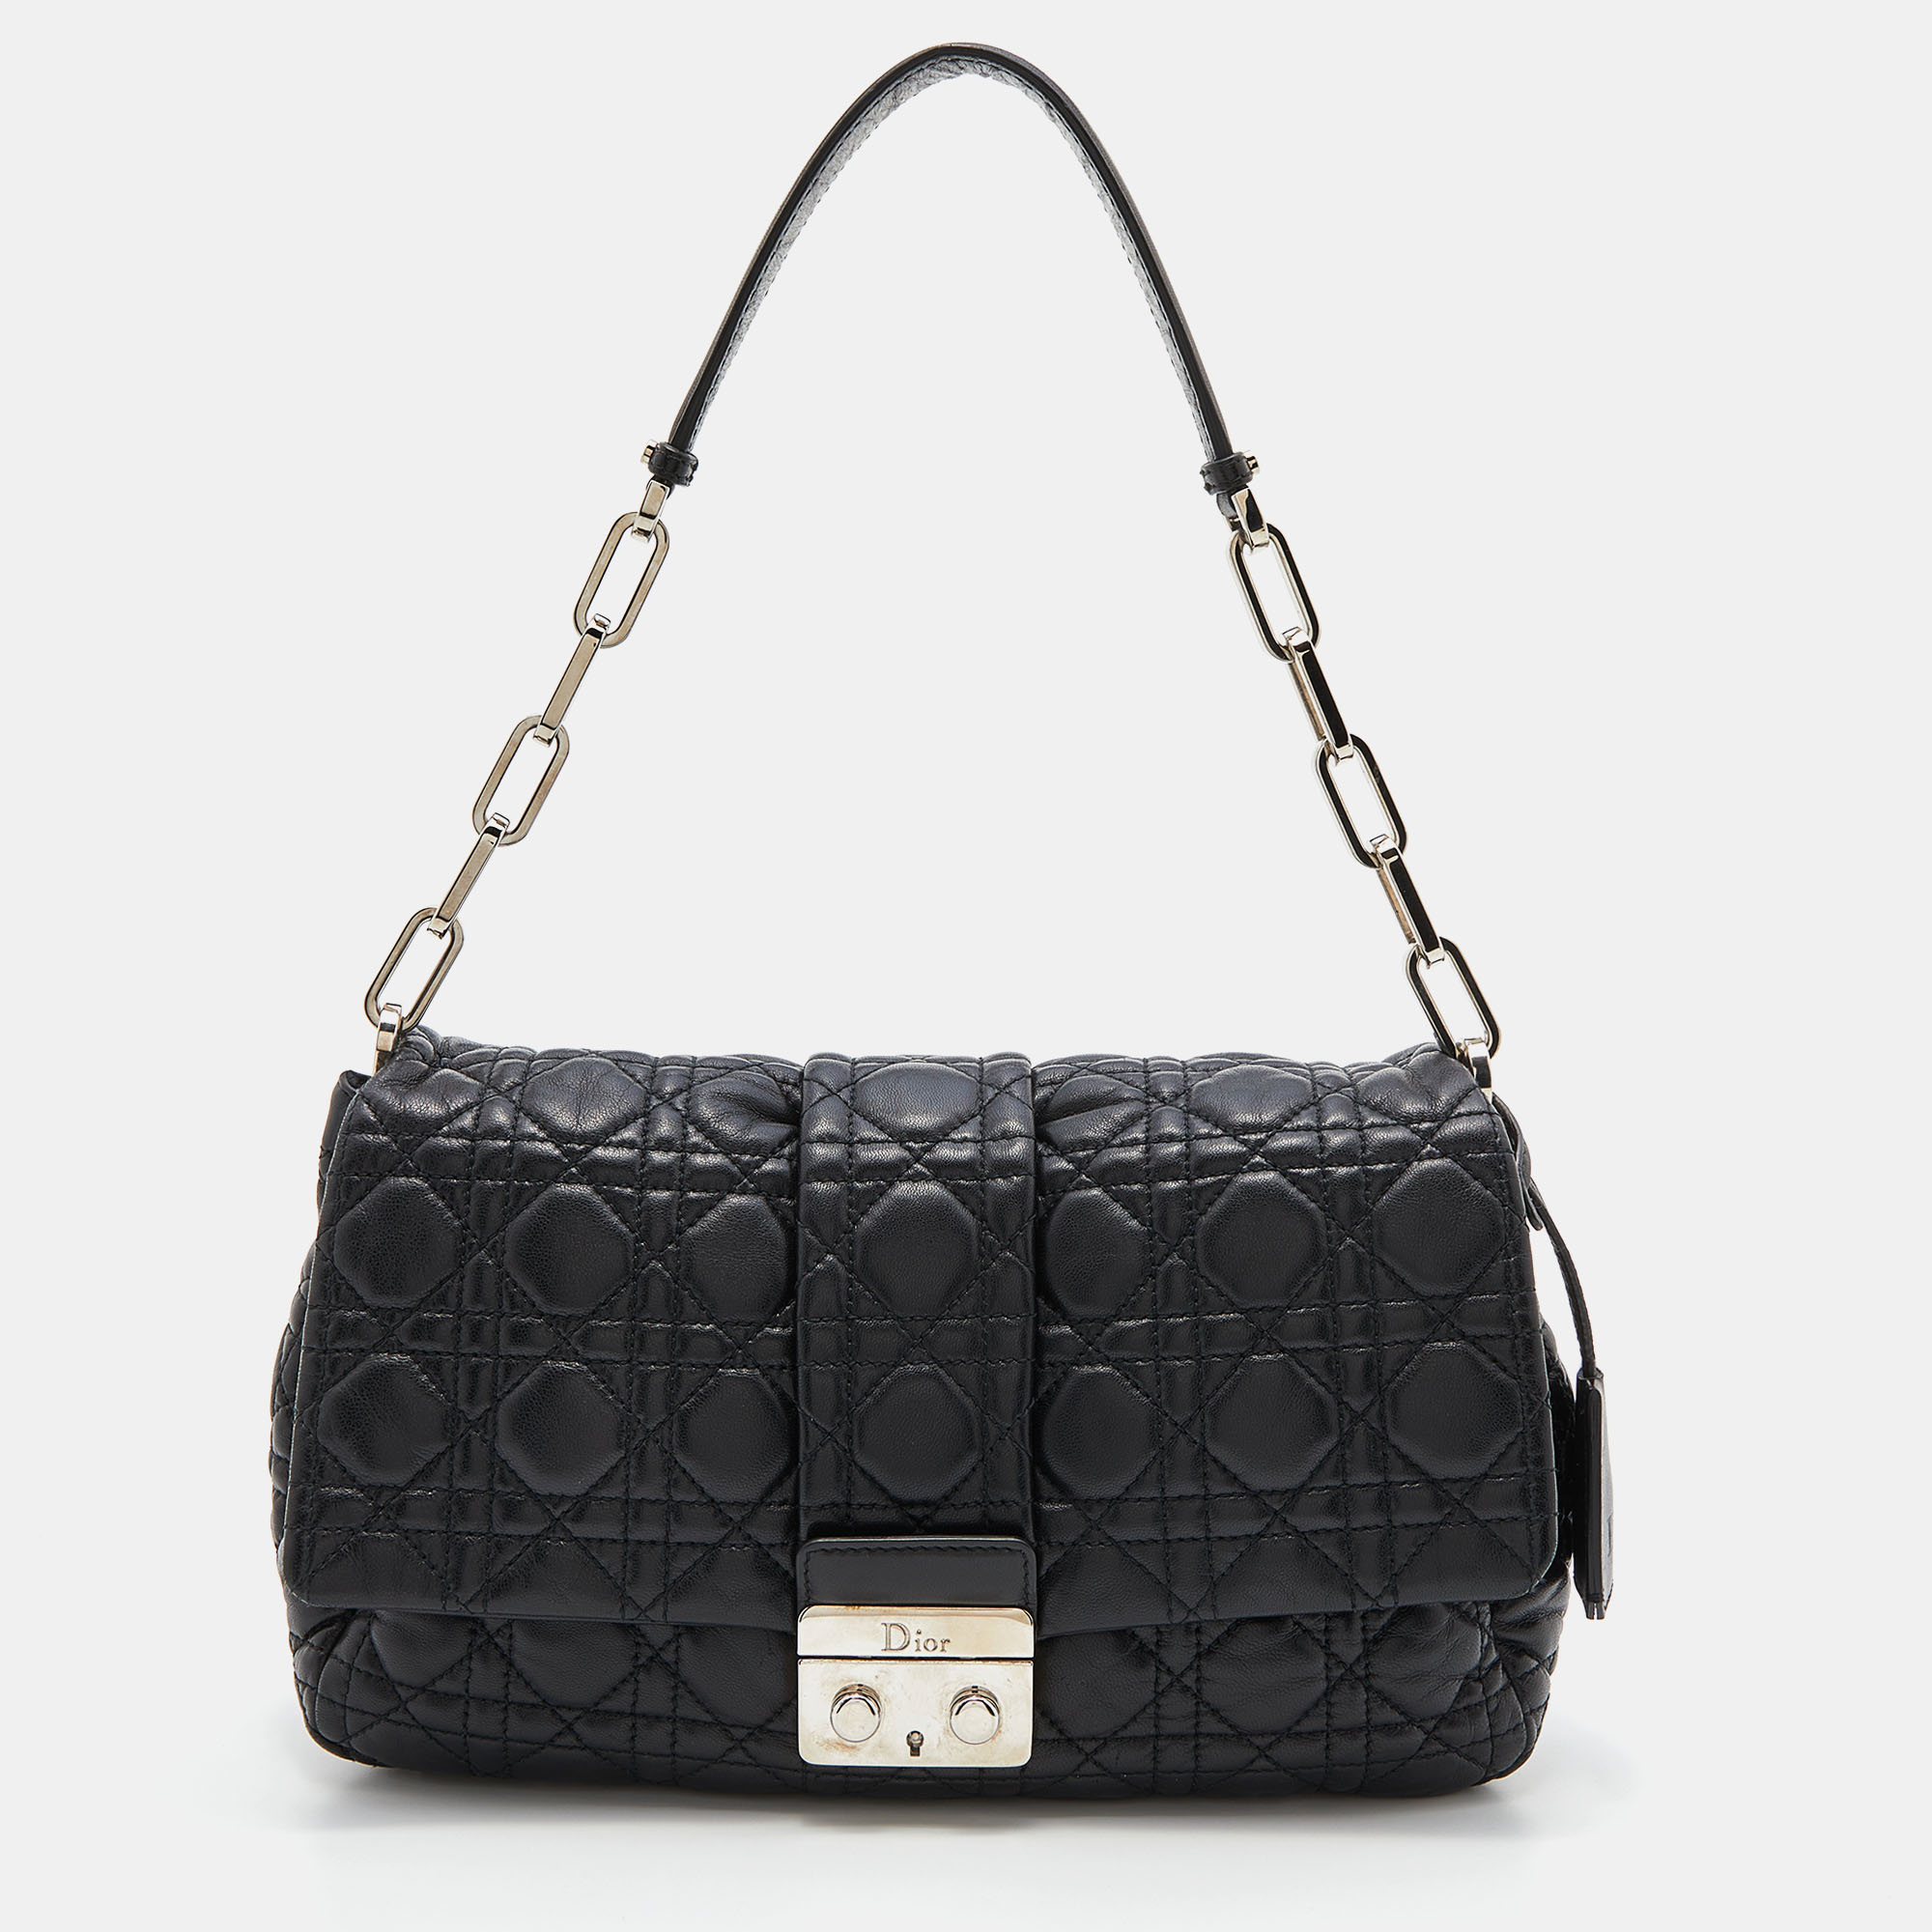 Dior Black Cannage Leather Miss Dior Flap Bag